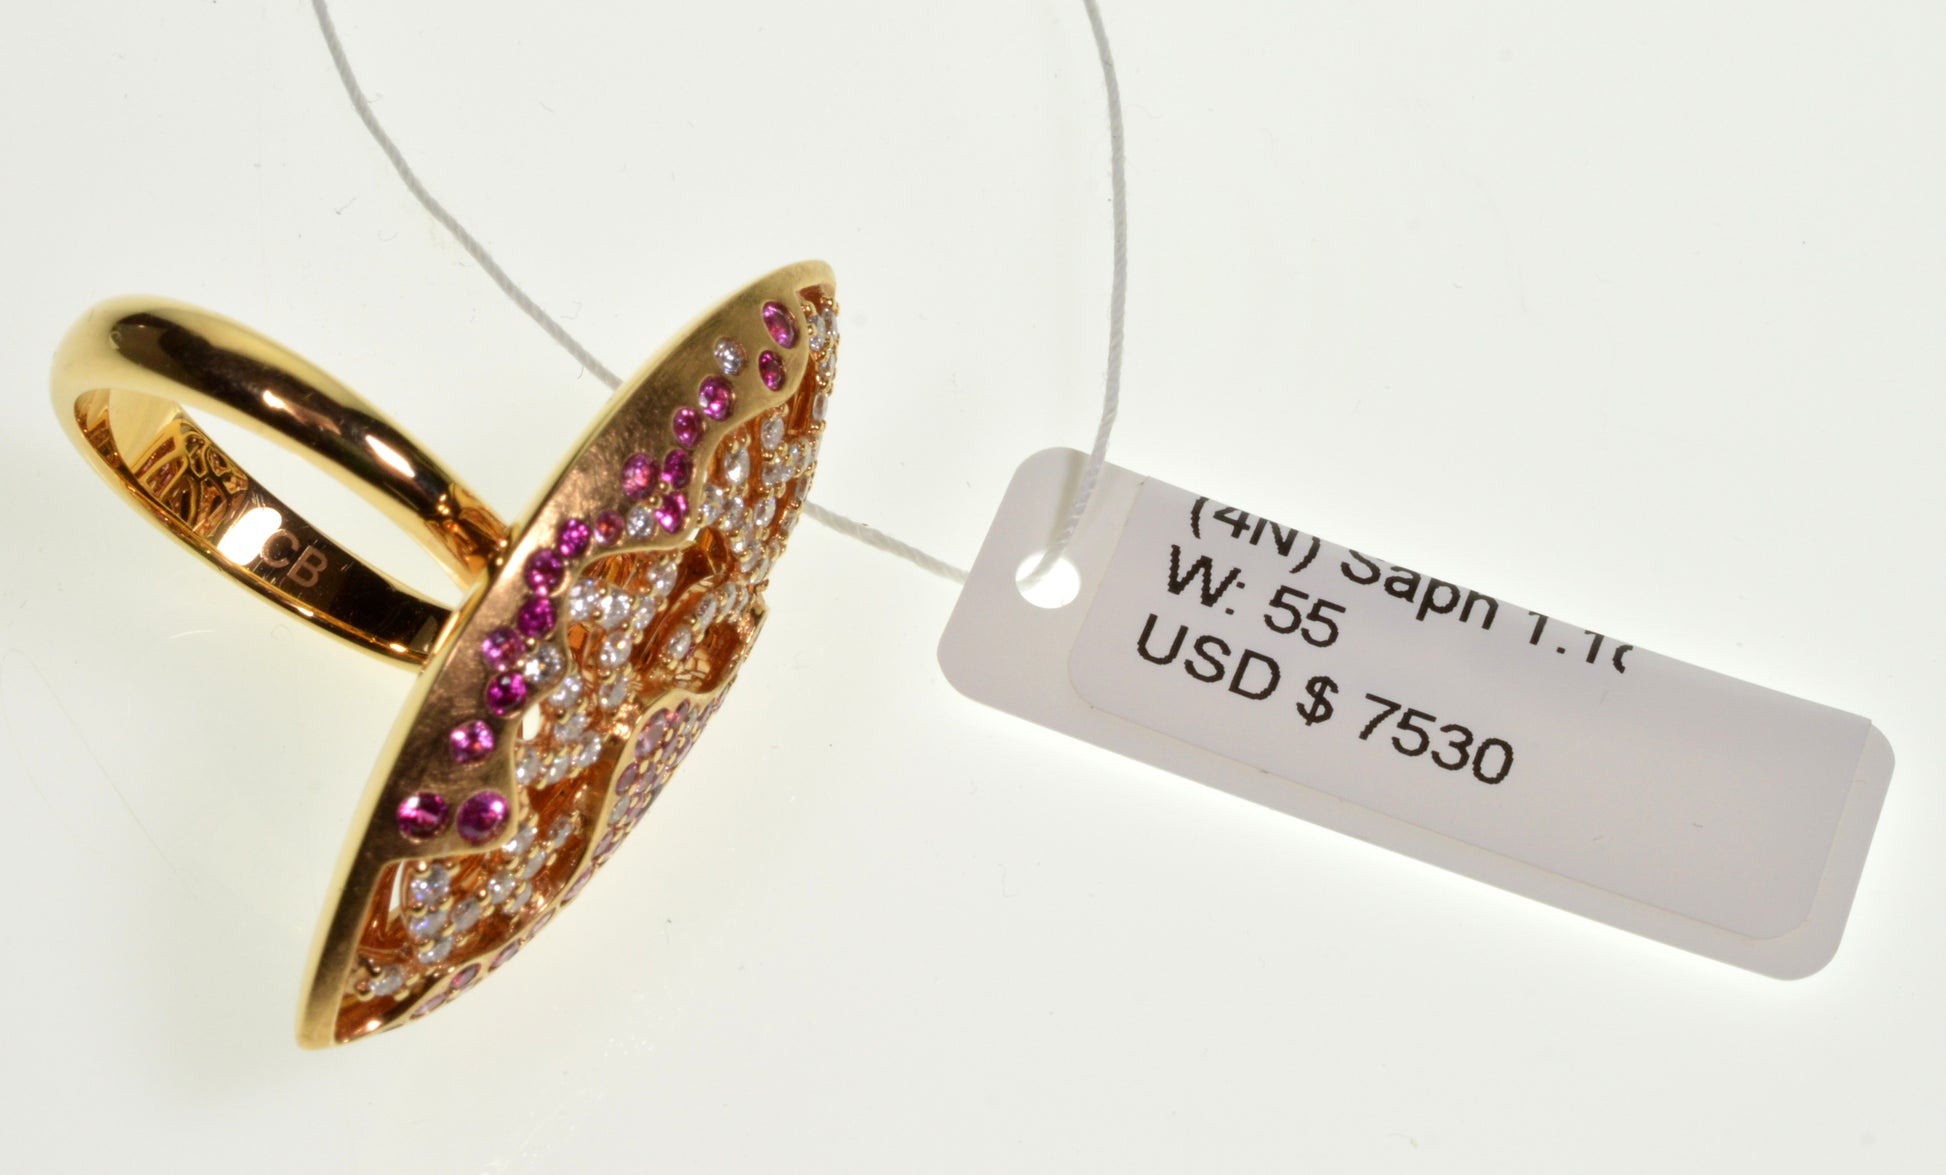 Bucherer 18k Gold Diamond Pink Sapphire Ring Size 7 1/4